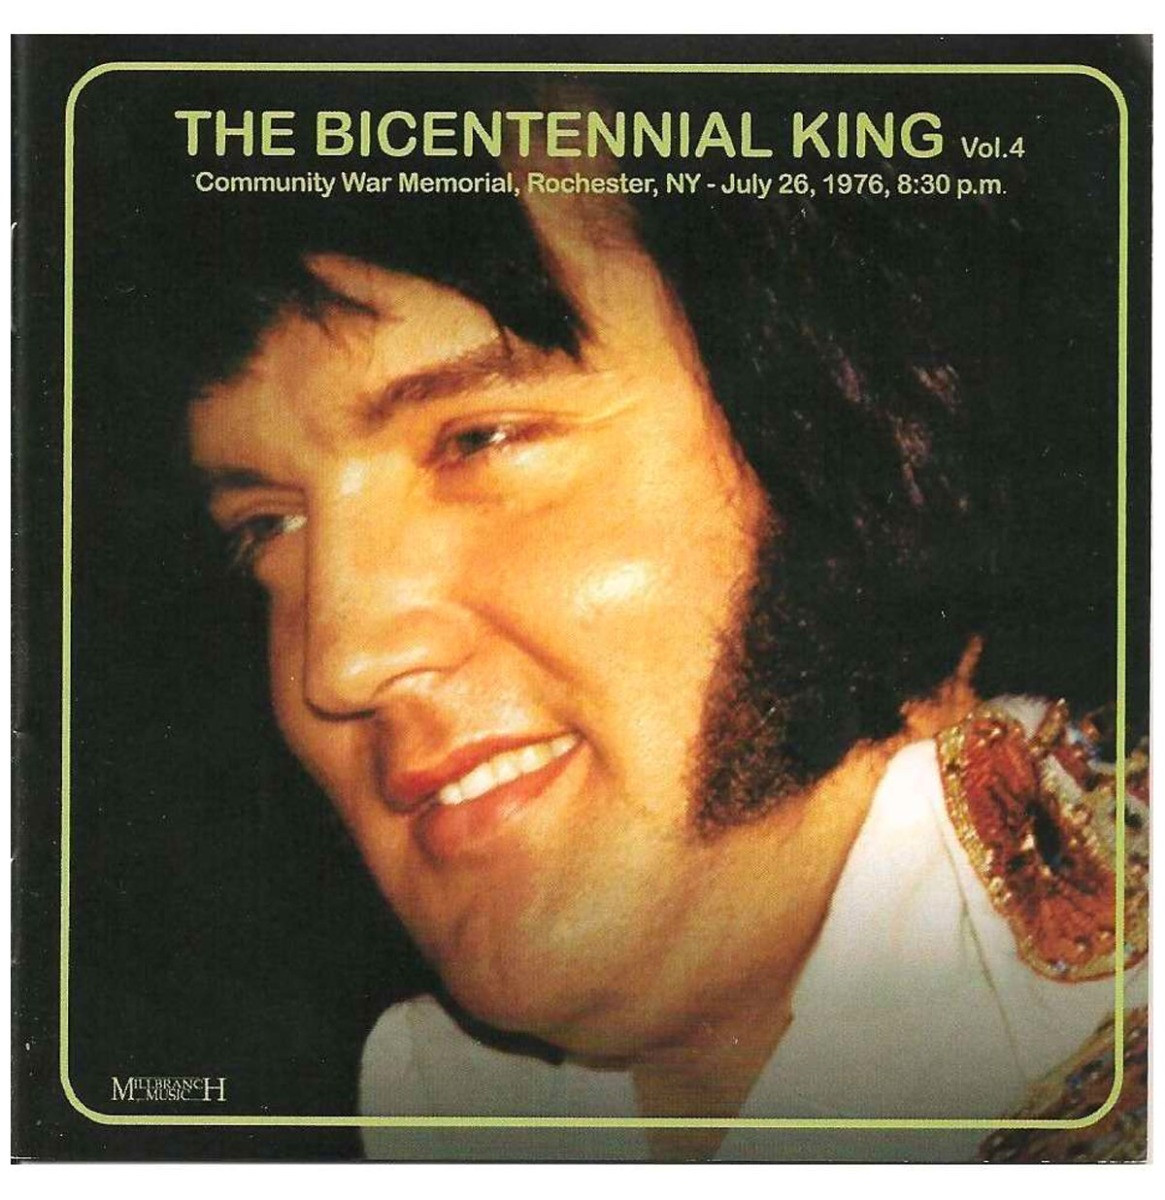 Elvis Presley - The Bicentennial King Vol. 4 Rochester NY July 26 1976 CD